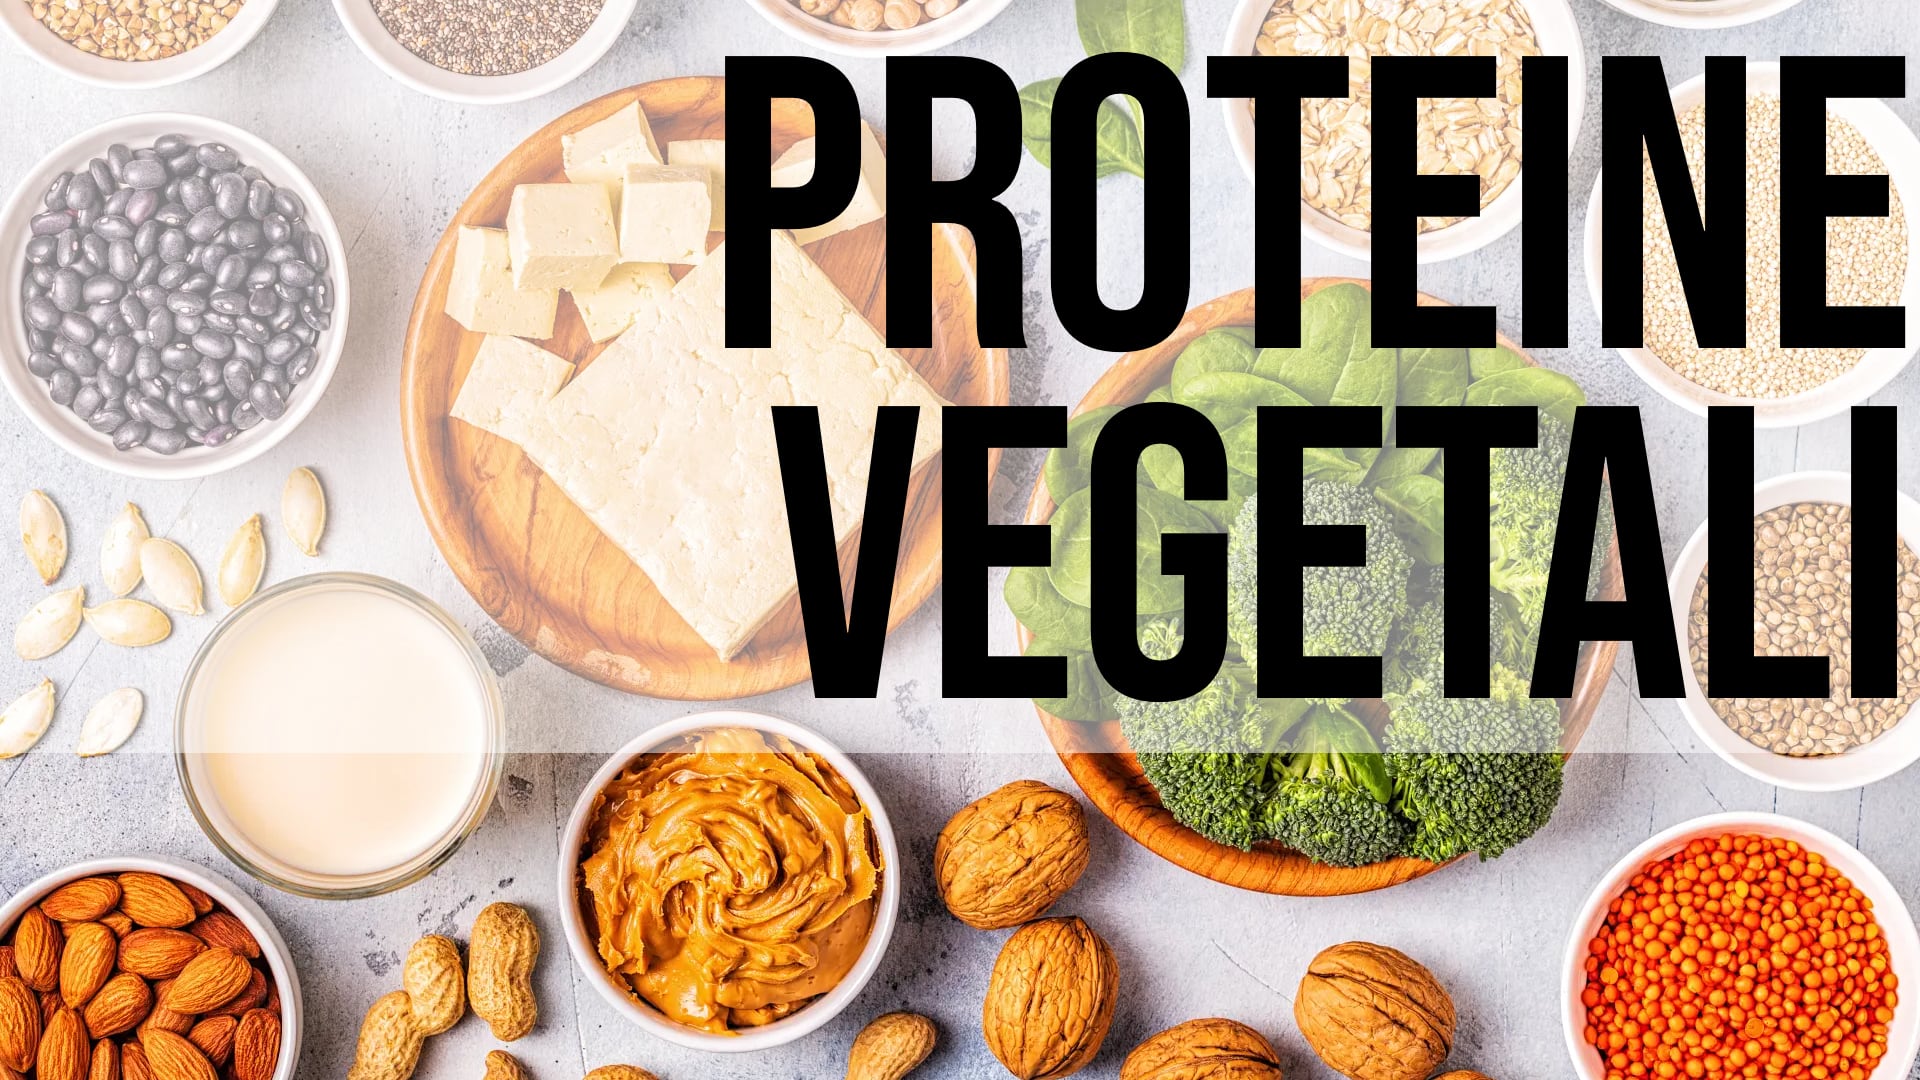 Proteine vegetali